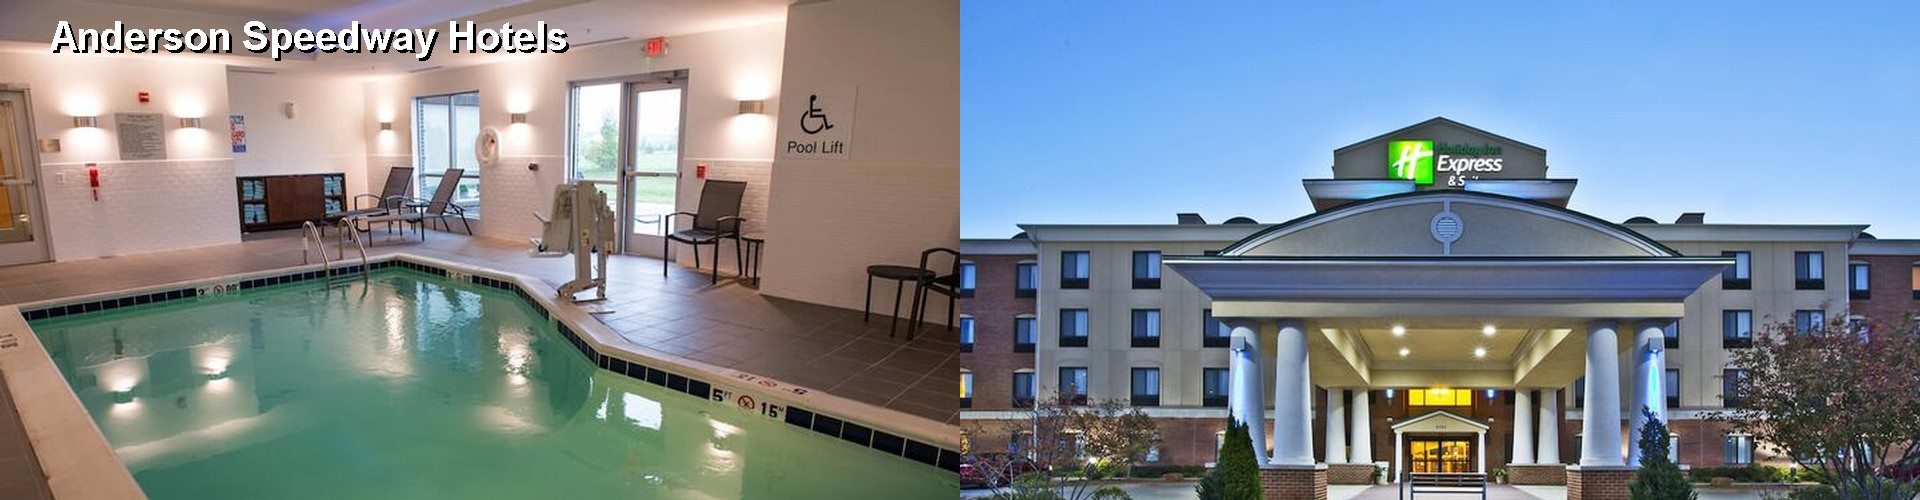 5 Best Hotels near Anderson Speedway